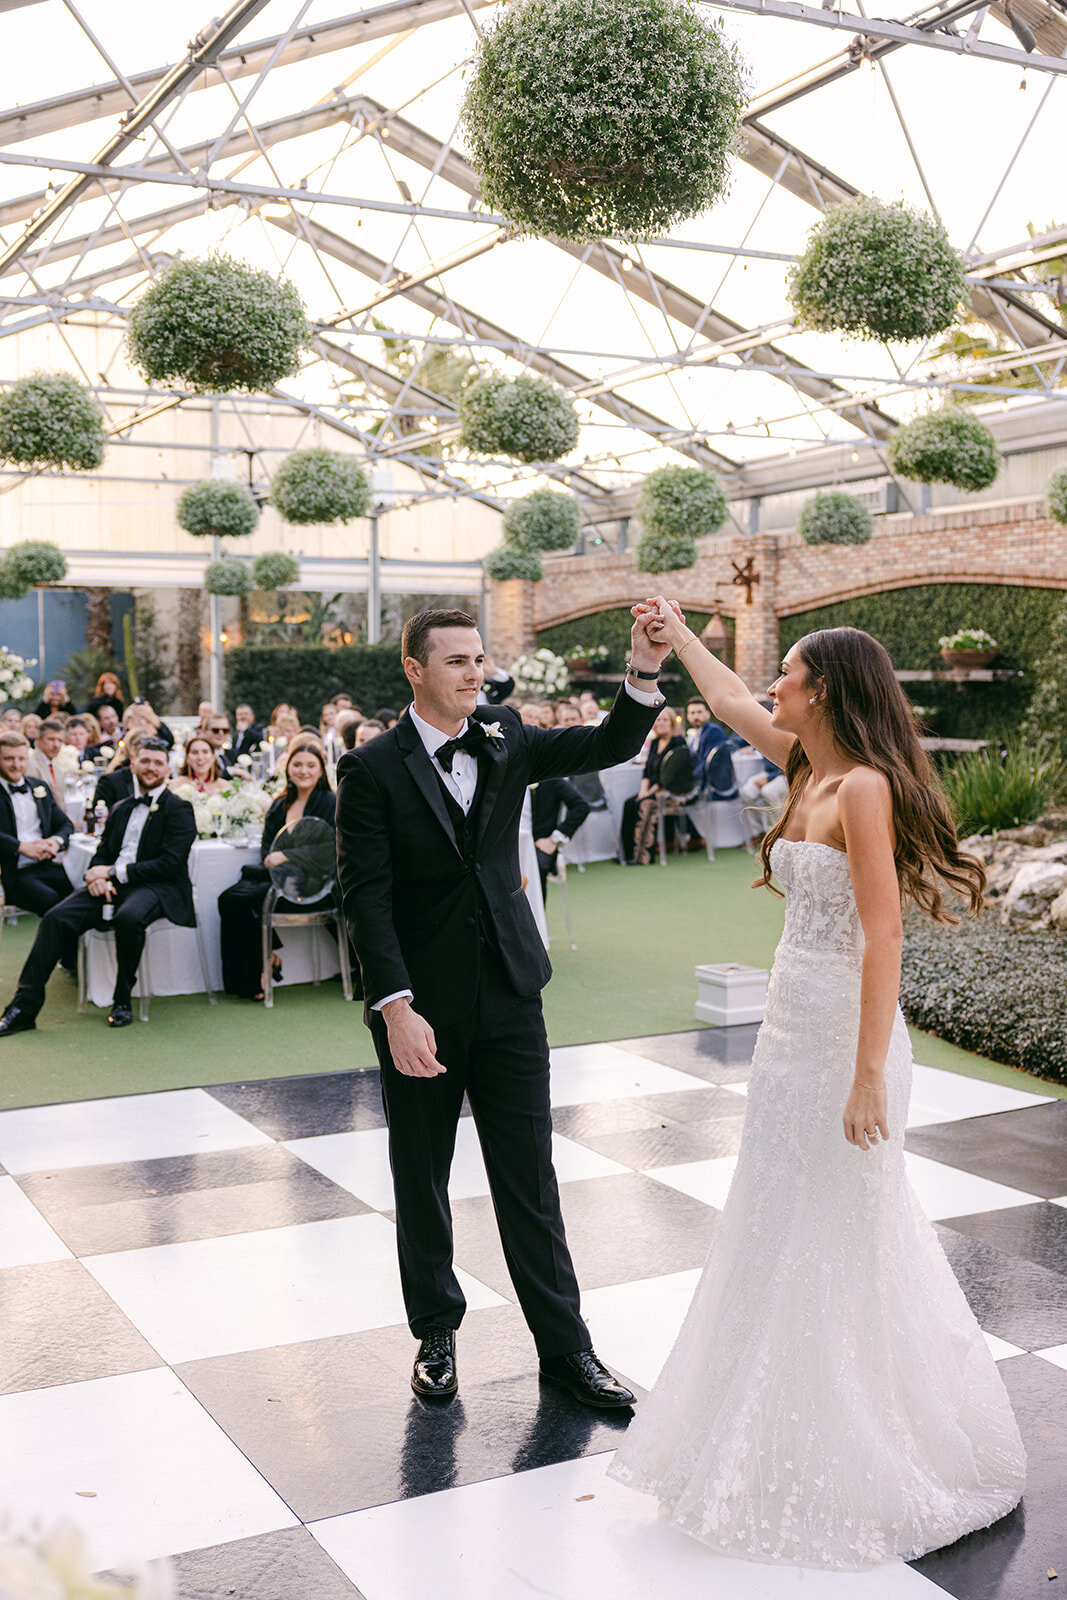 CORNELIA ZAISS PHOTOGRAPHY ASHLYN + RHETT WEDDING SNEAKS 76